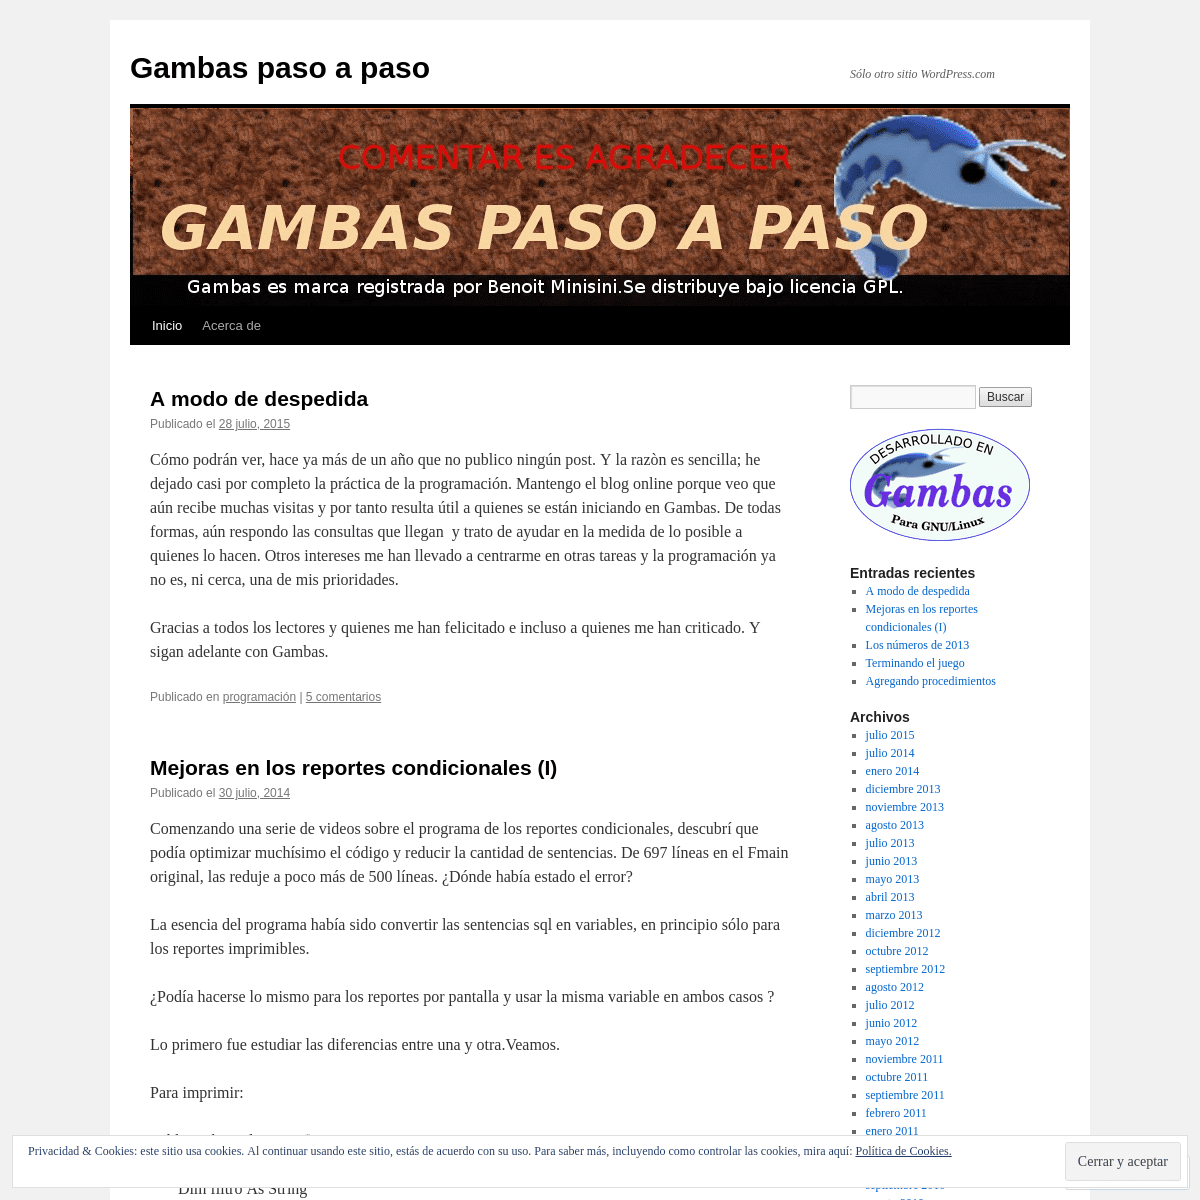 A complete backup of gambeando.wordpress.com